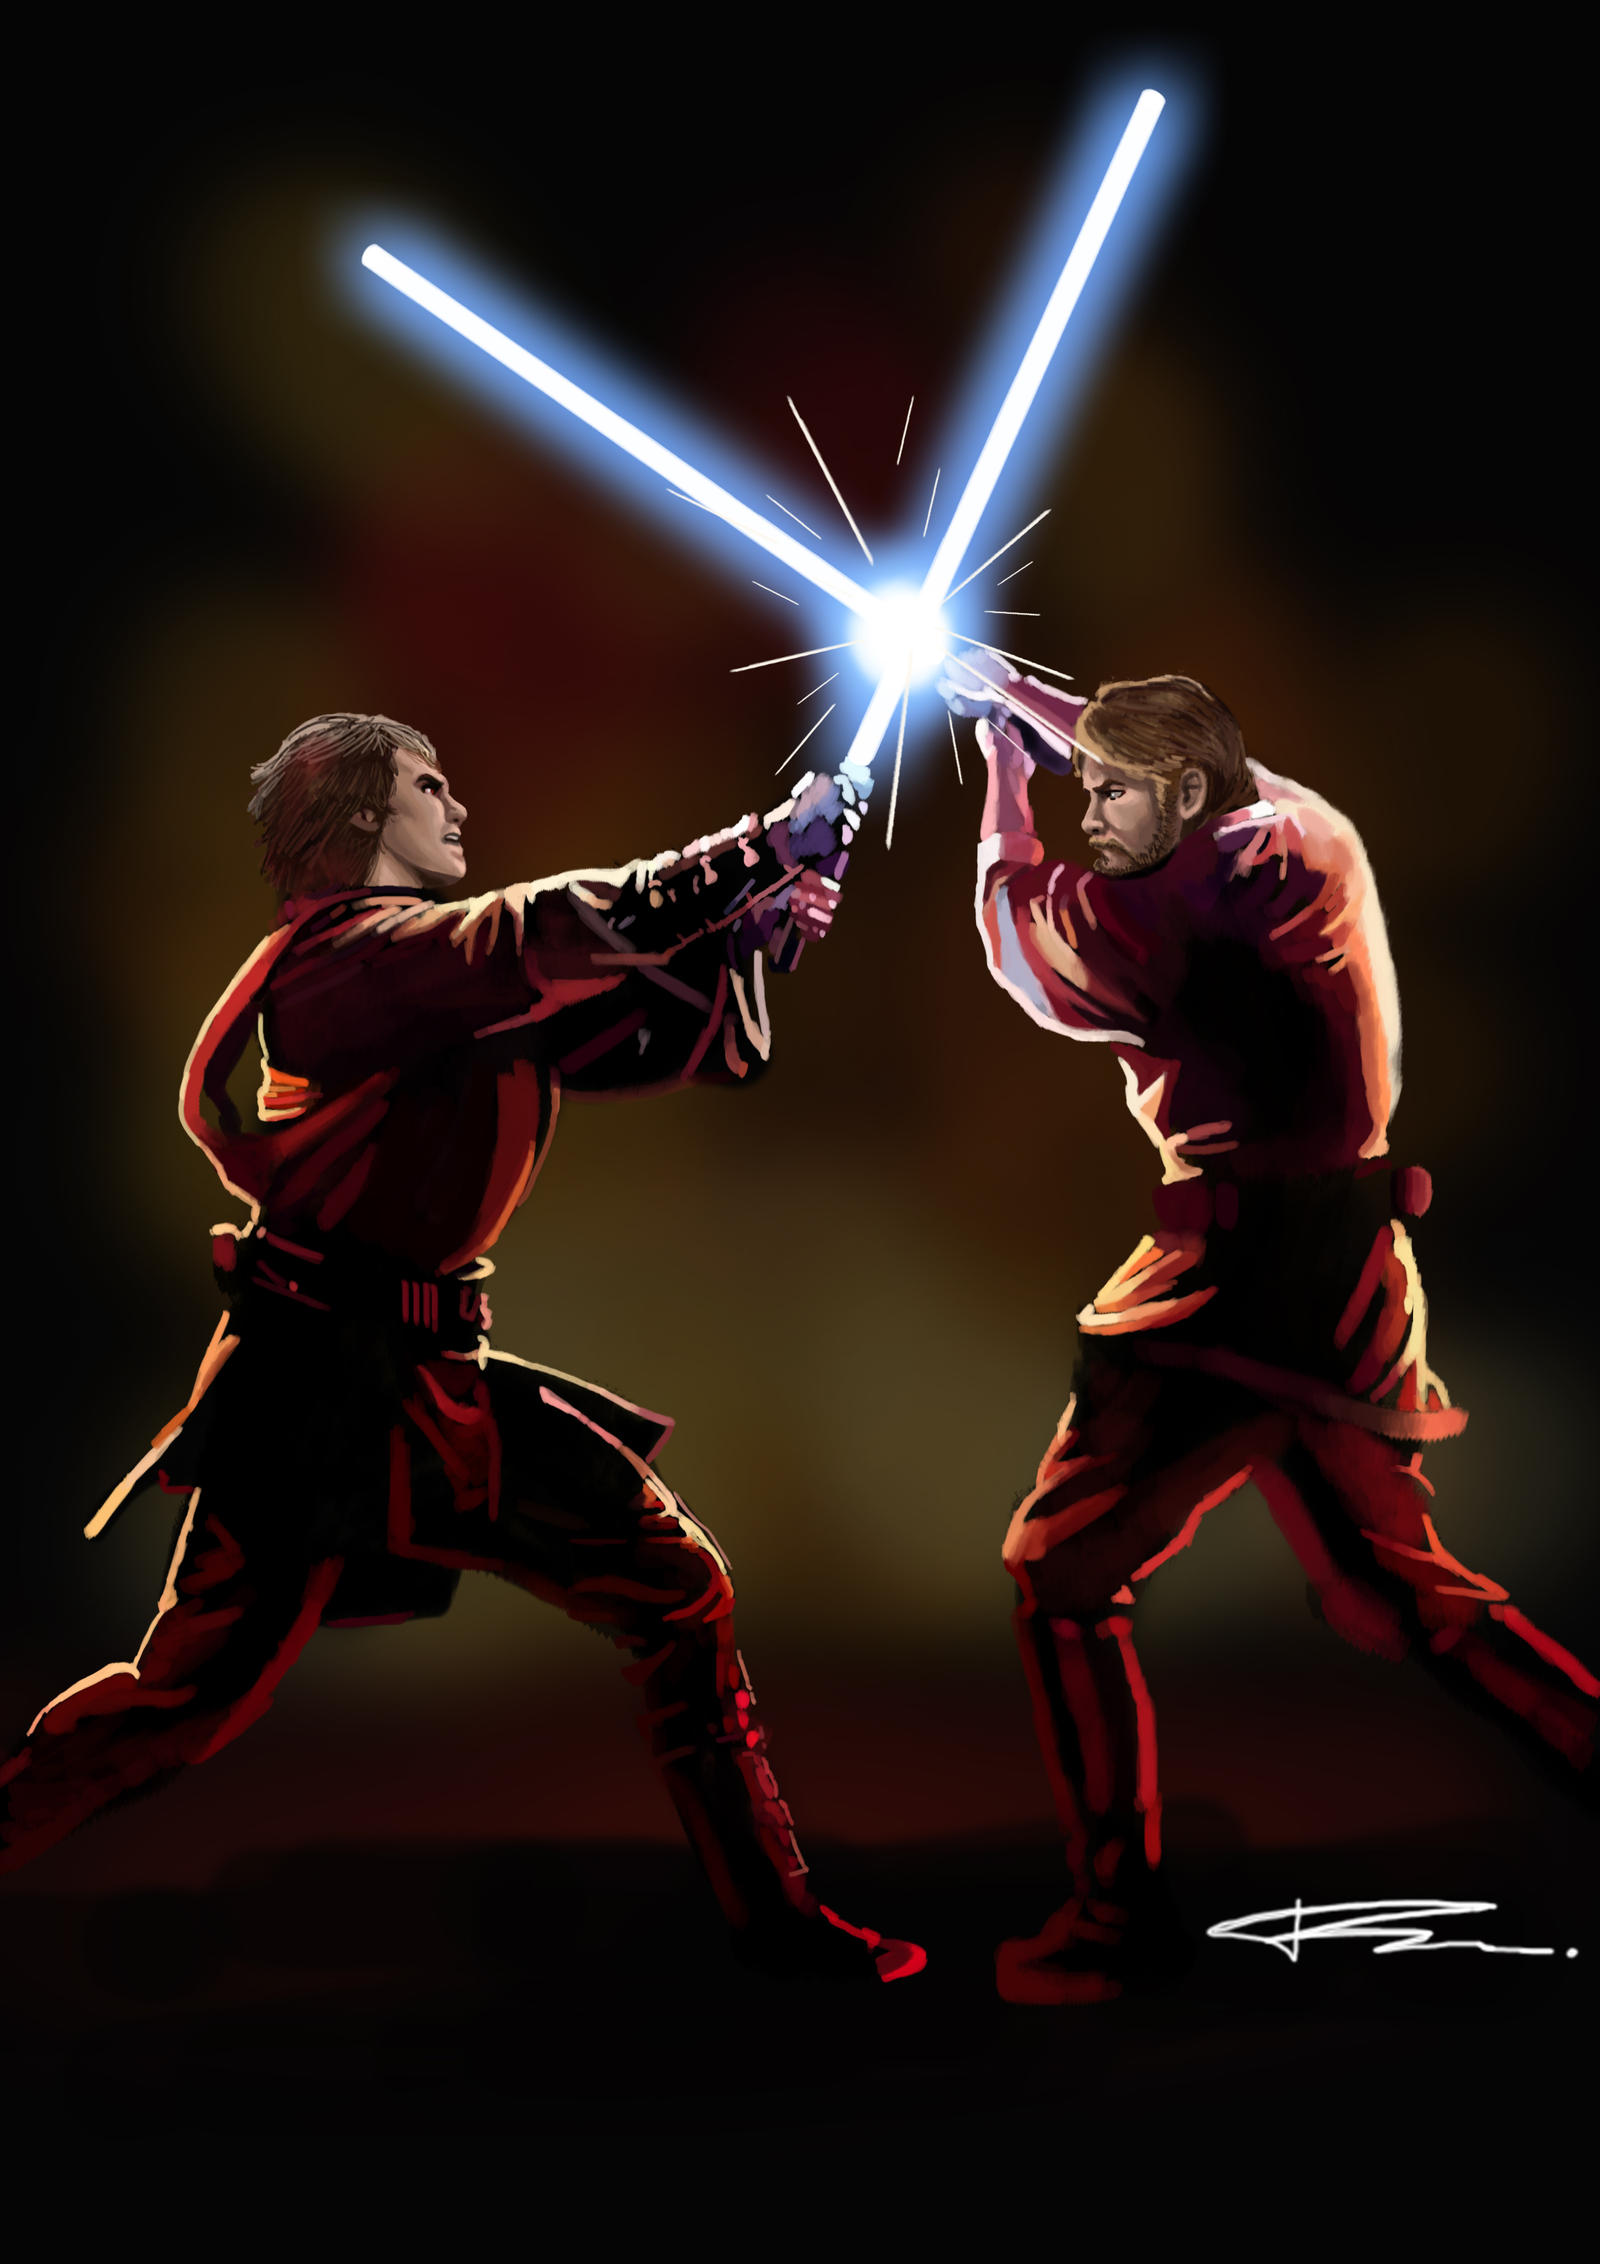 Anakin vs Obi-wan Revenge of the Sith by igor-frankenstone on DeviantArt